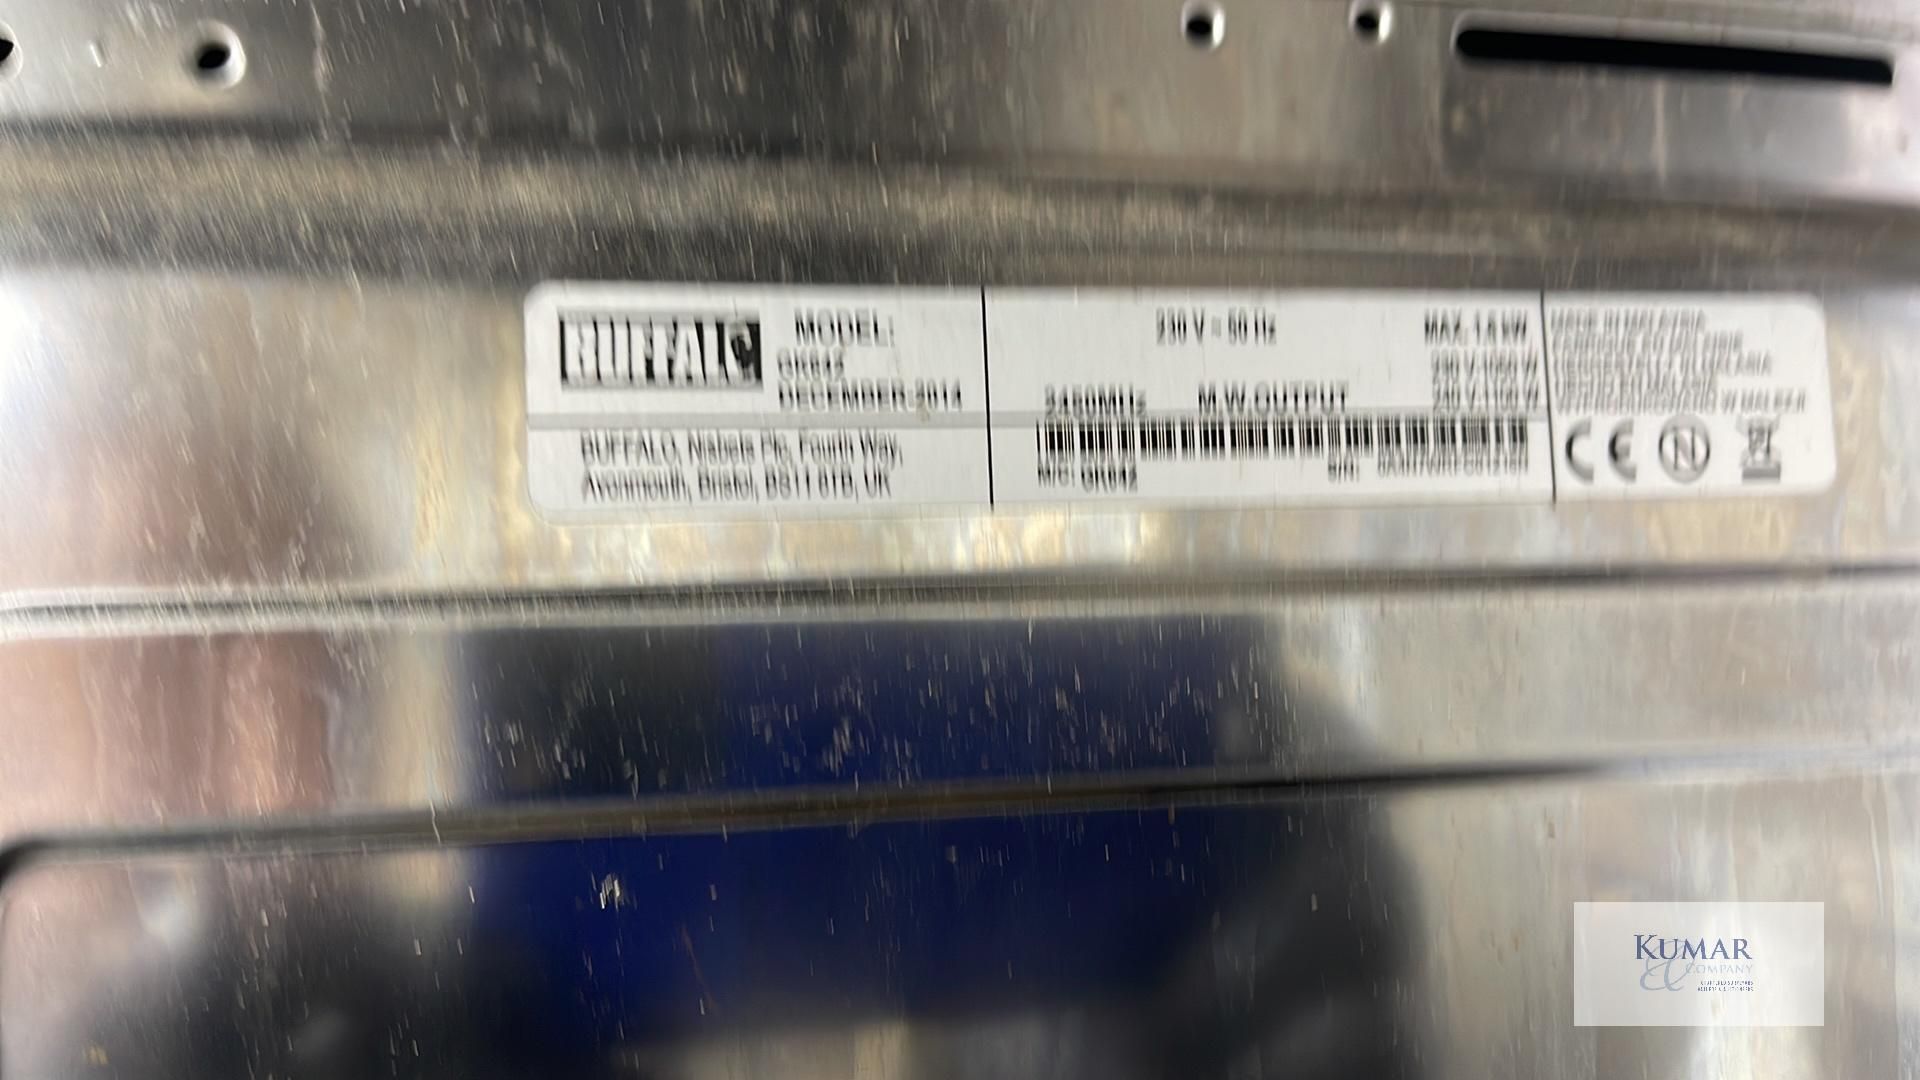 Buffalo Model GK642 1100 Watt Commercial Stainless Steel Microwave Oven, Serial No. 1216N (2014) - Image 4 of 5